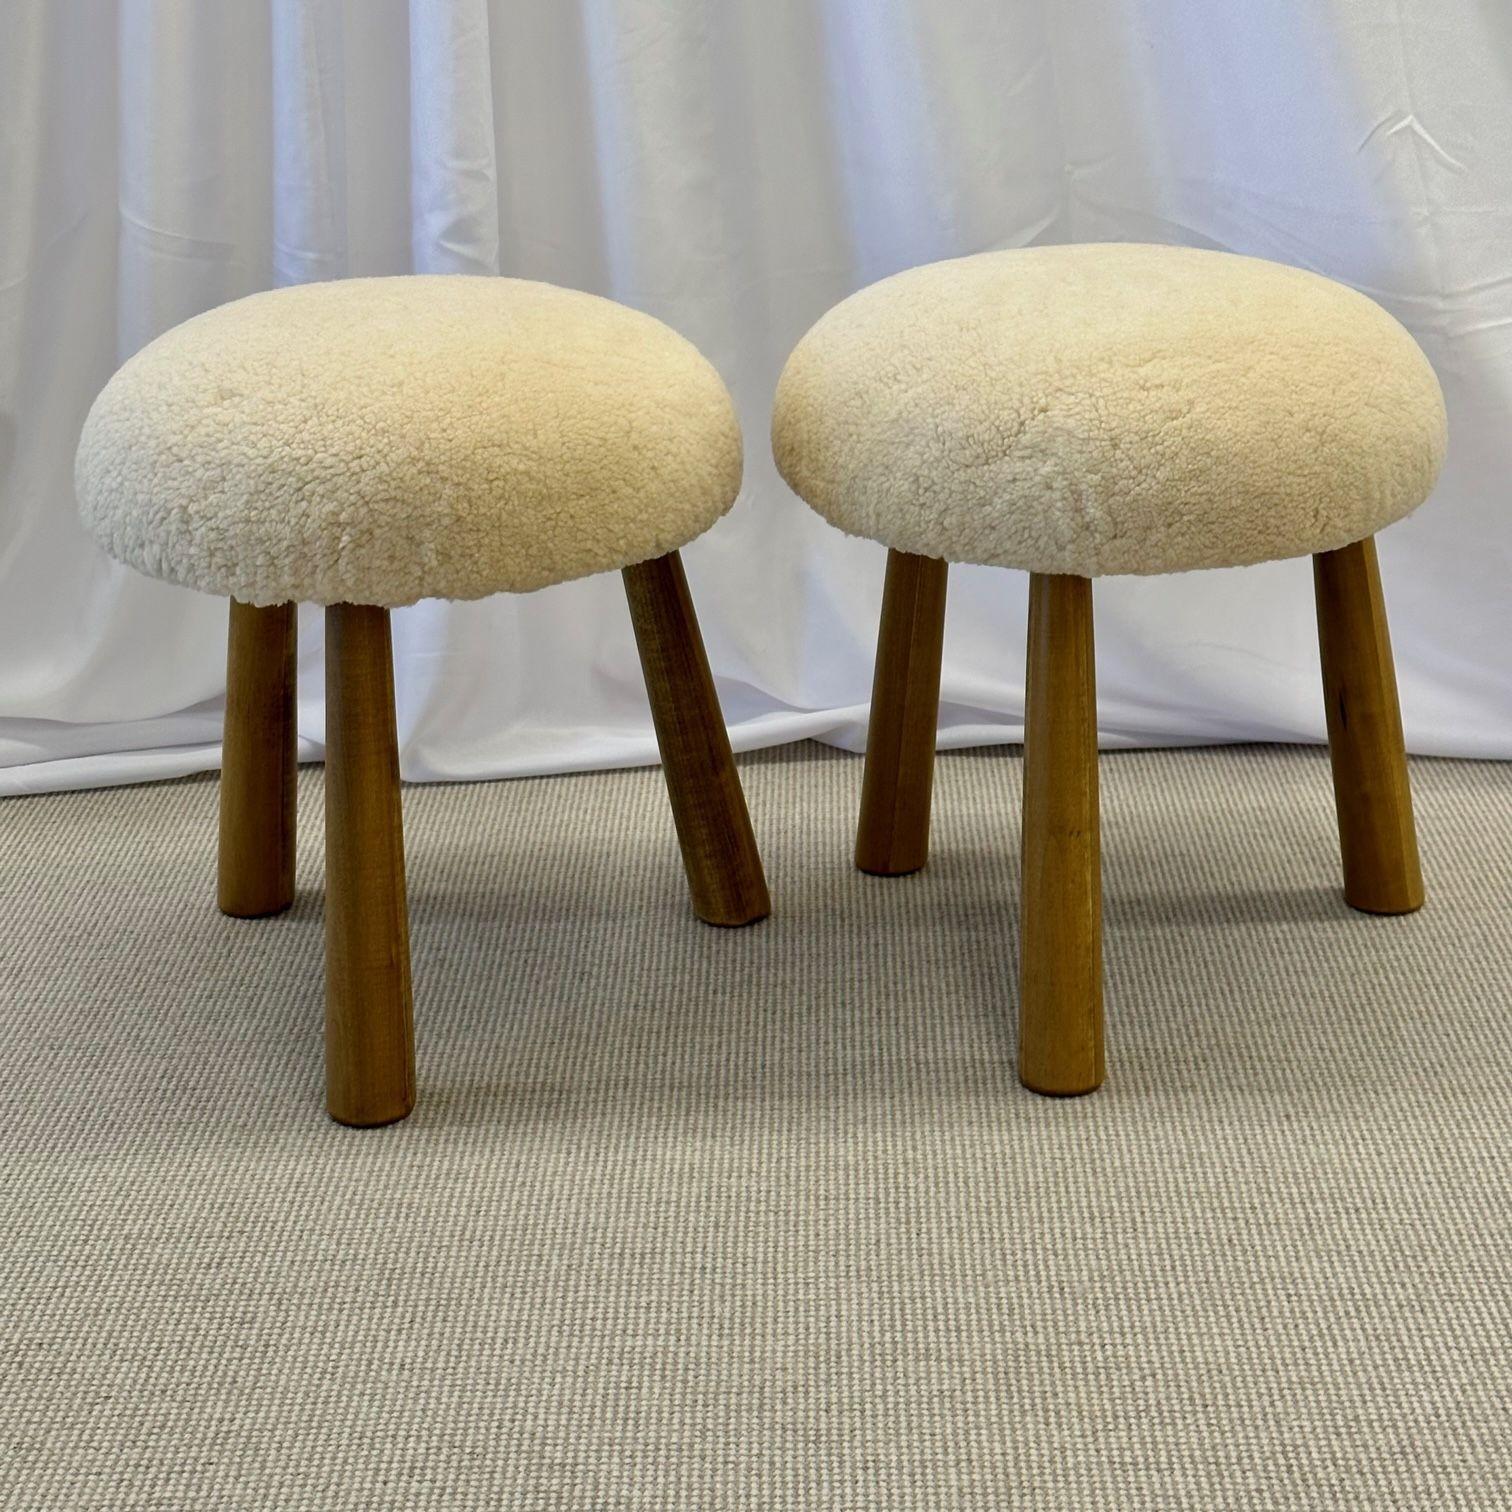 contemporary foot stools